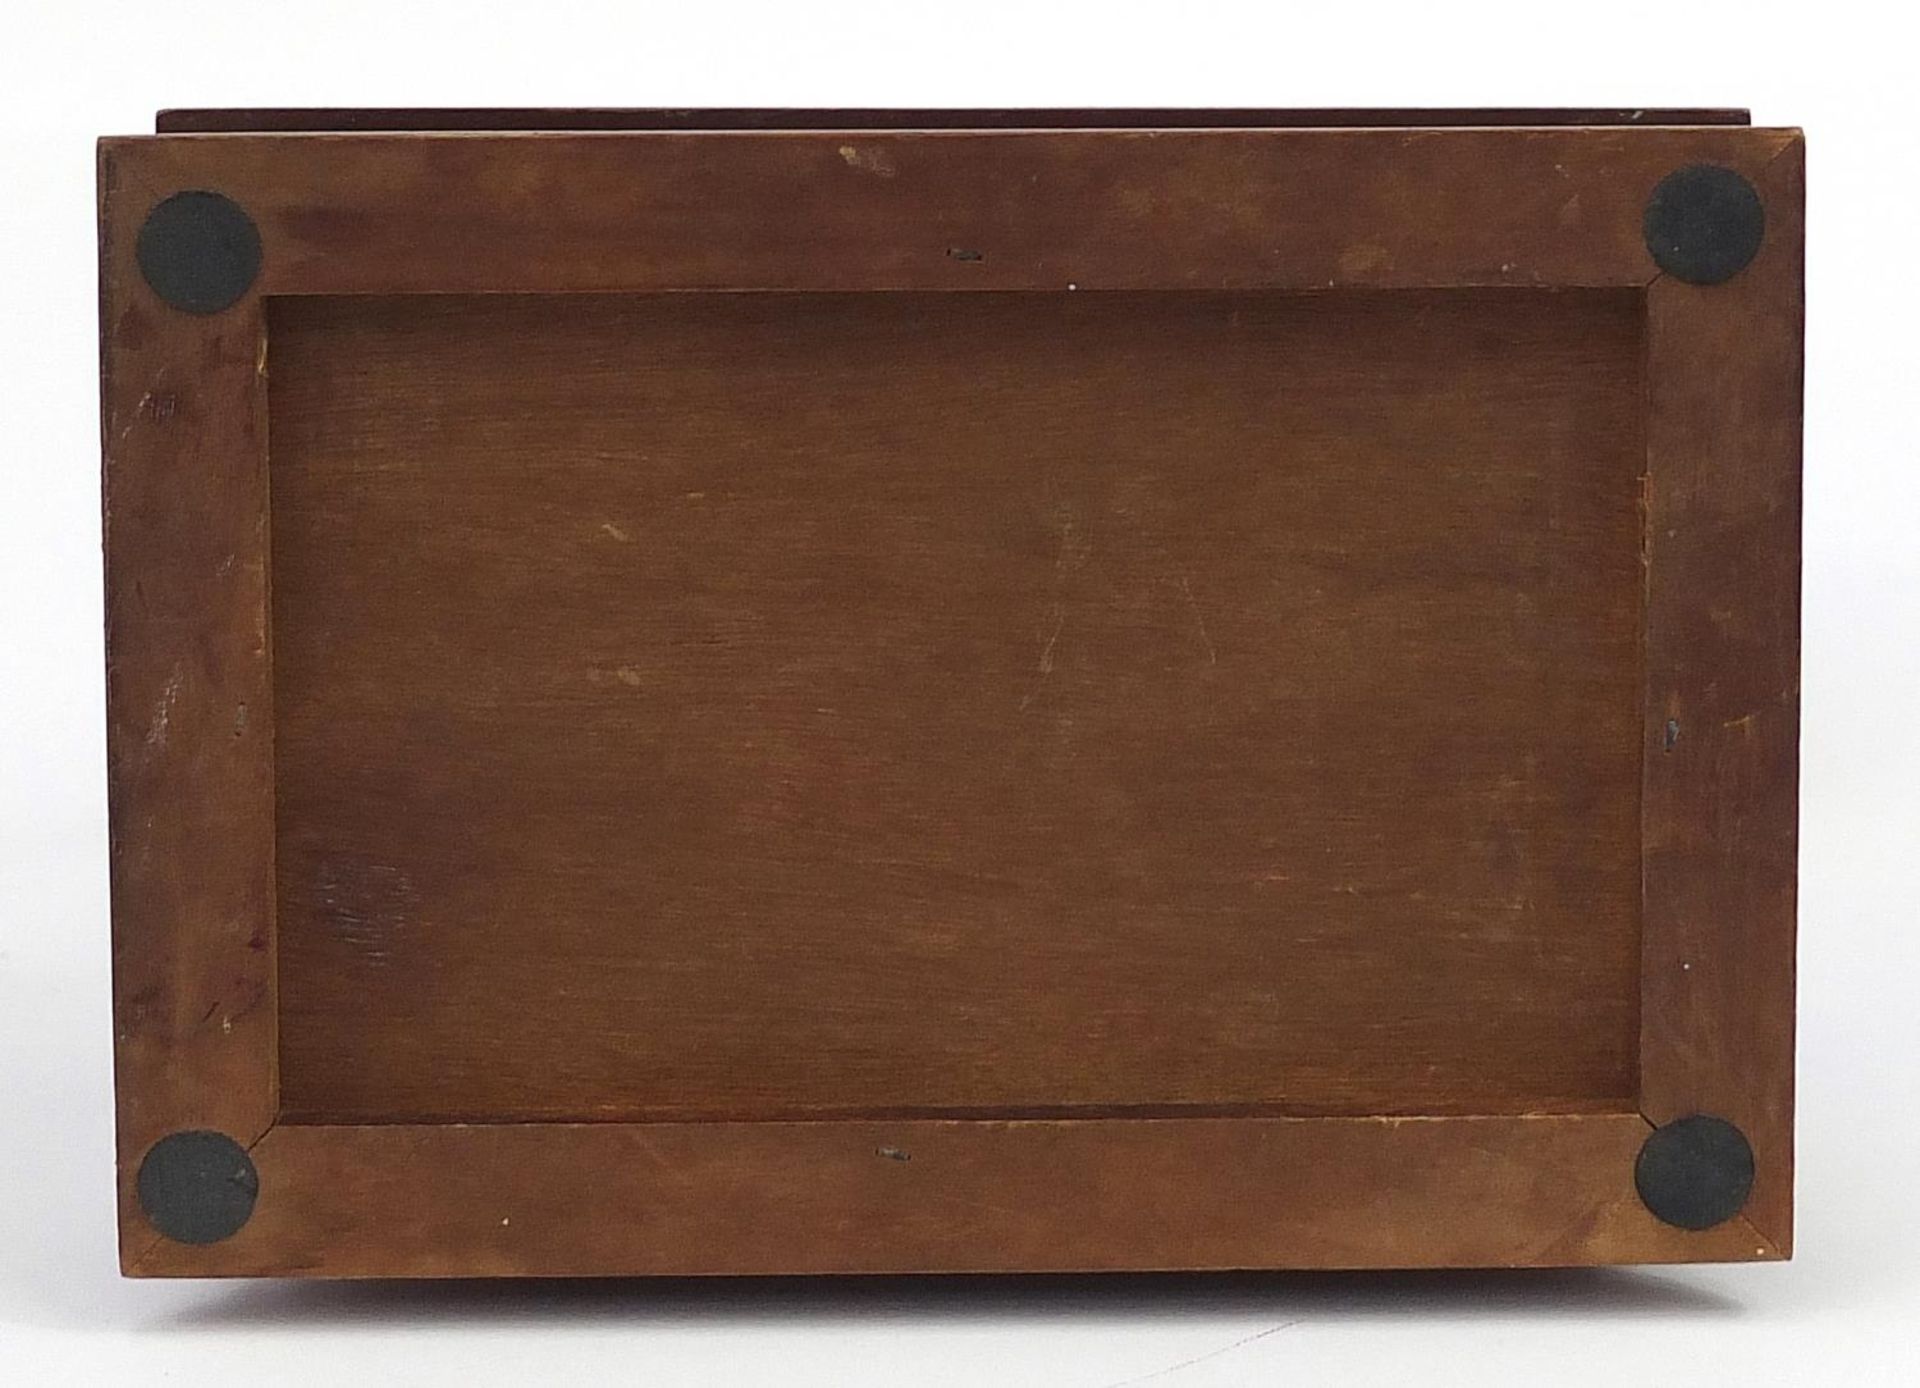 Mahogany and brass gramophone design music box, 28cm high - Image 3 of 3